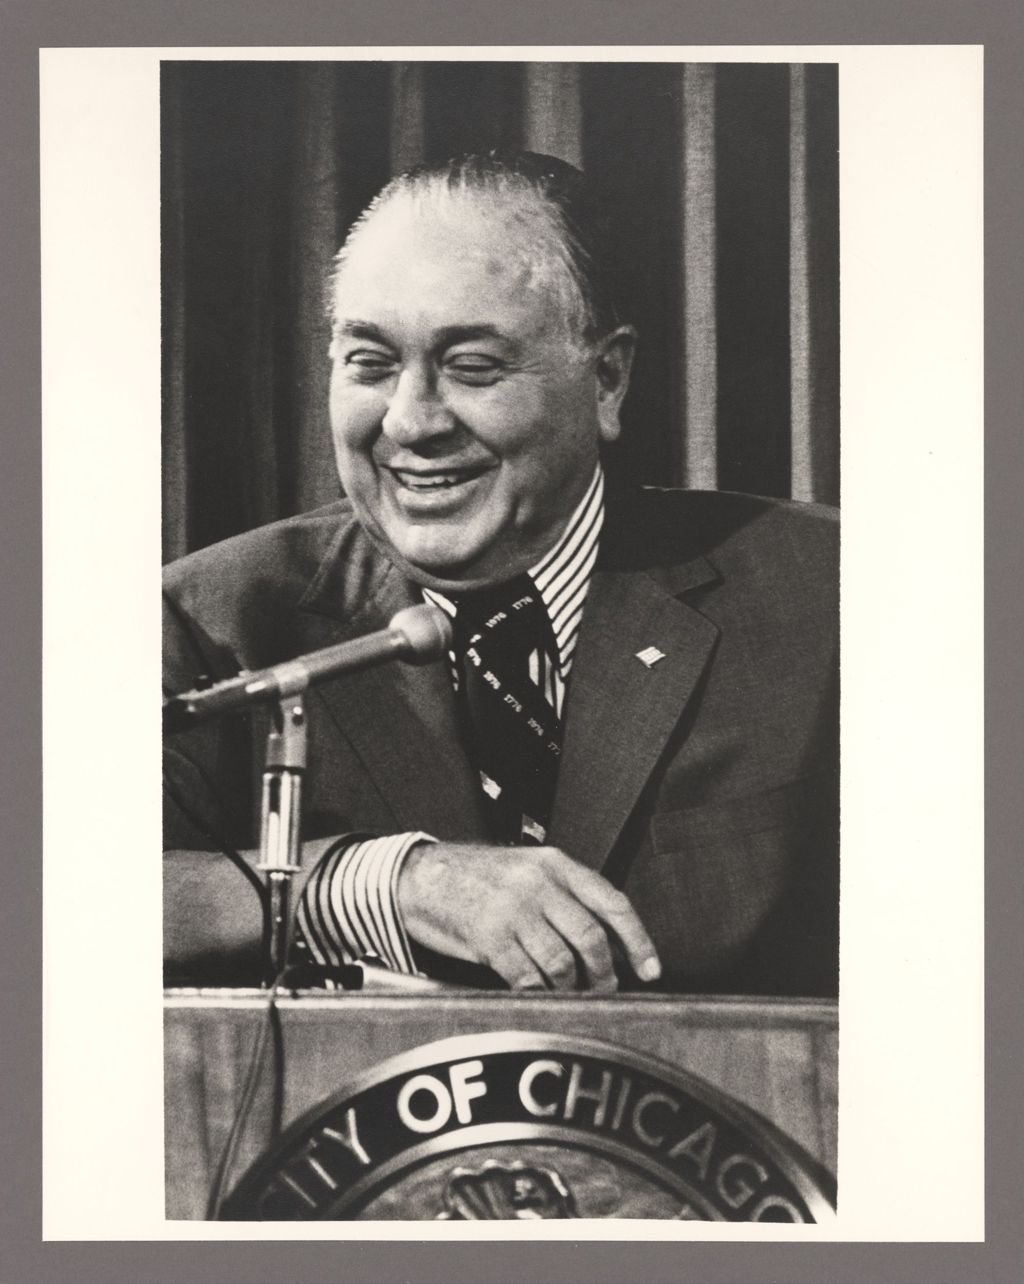 Miniature of Richard J. Daley at a podium, laughing